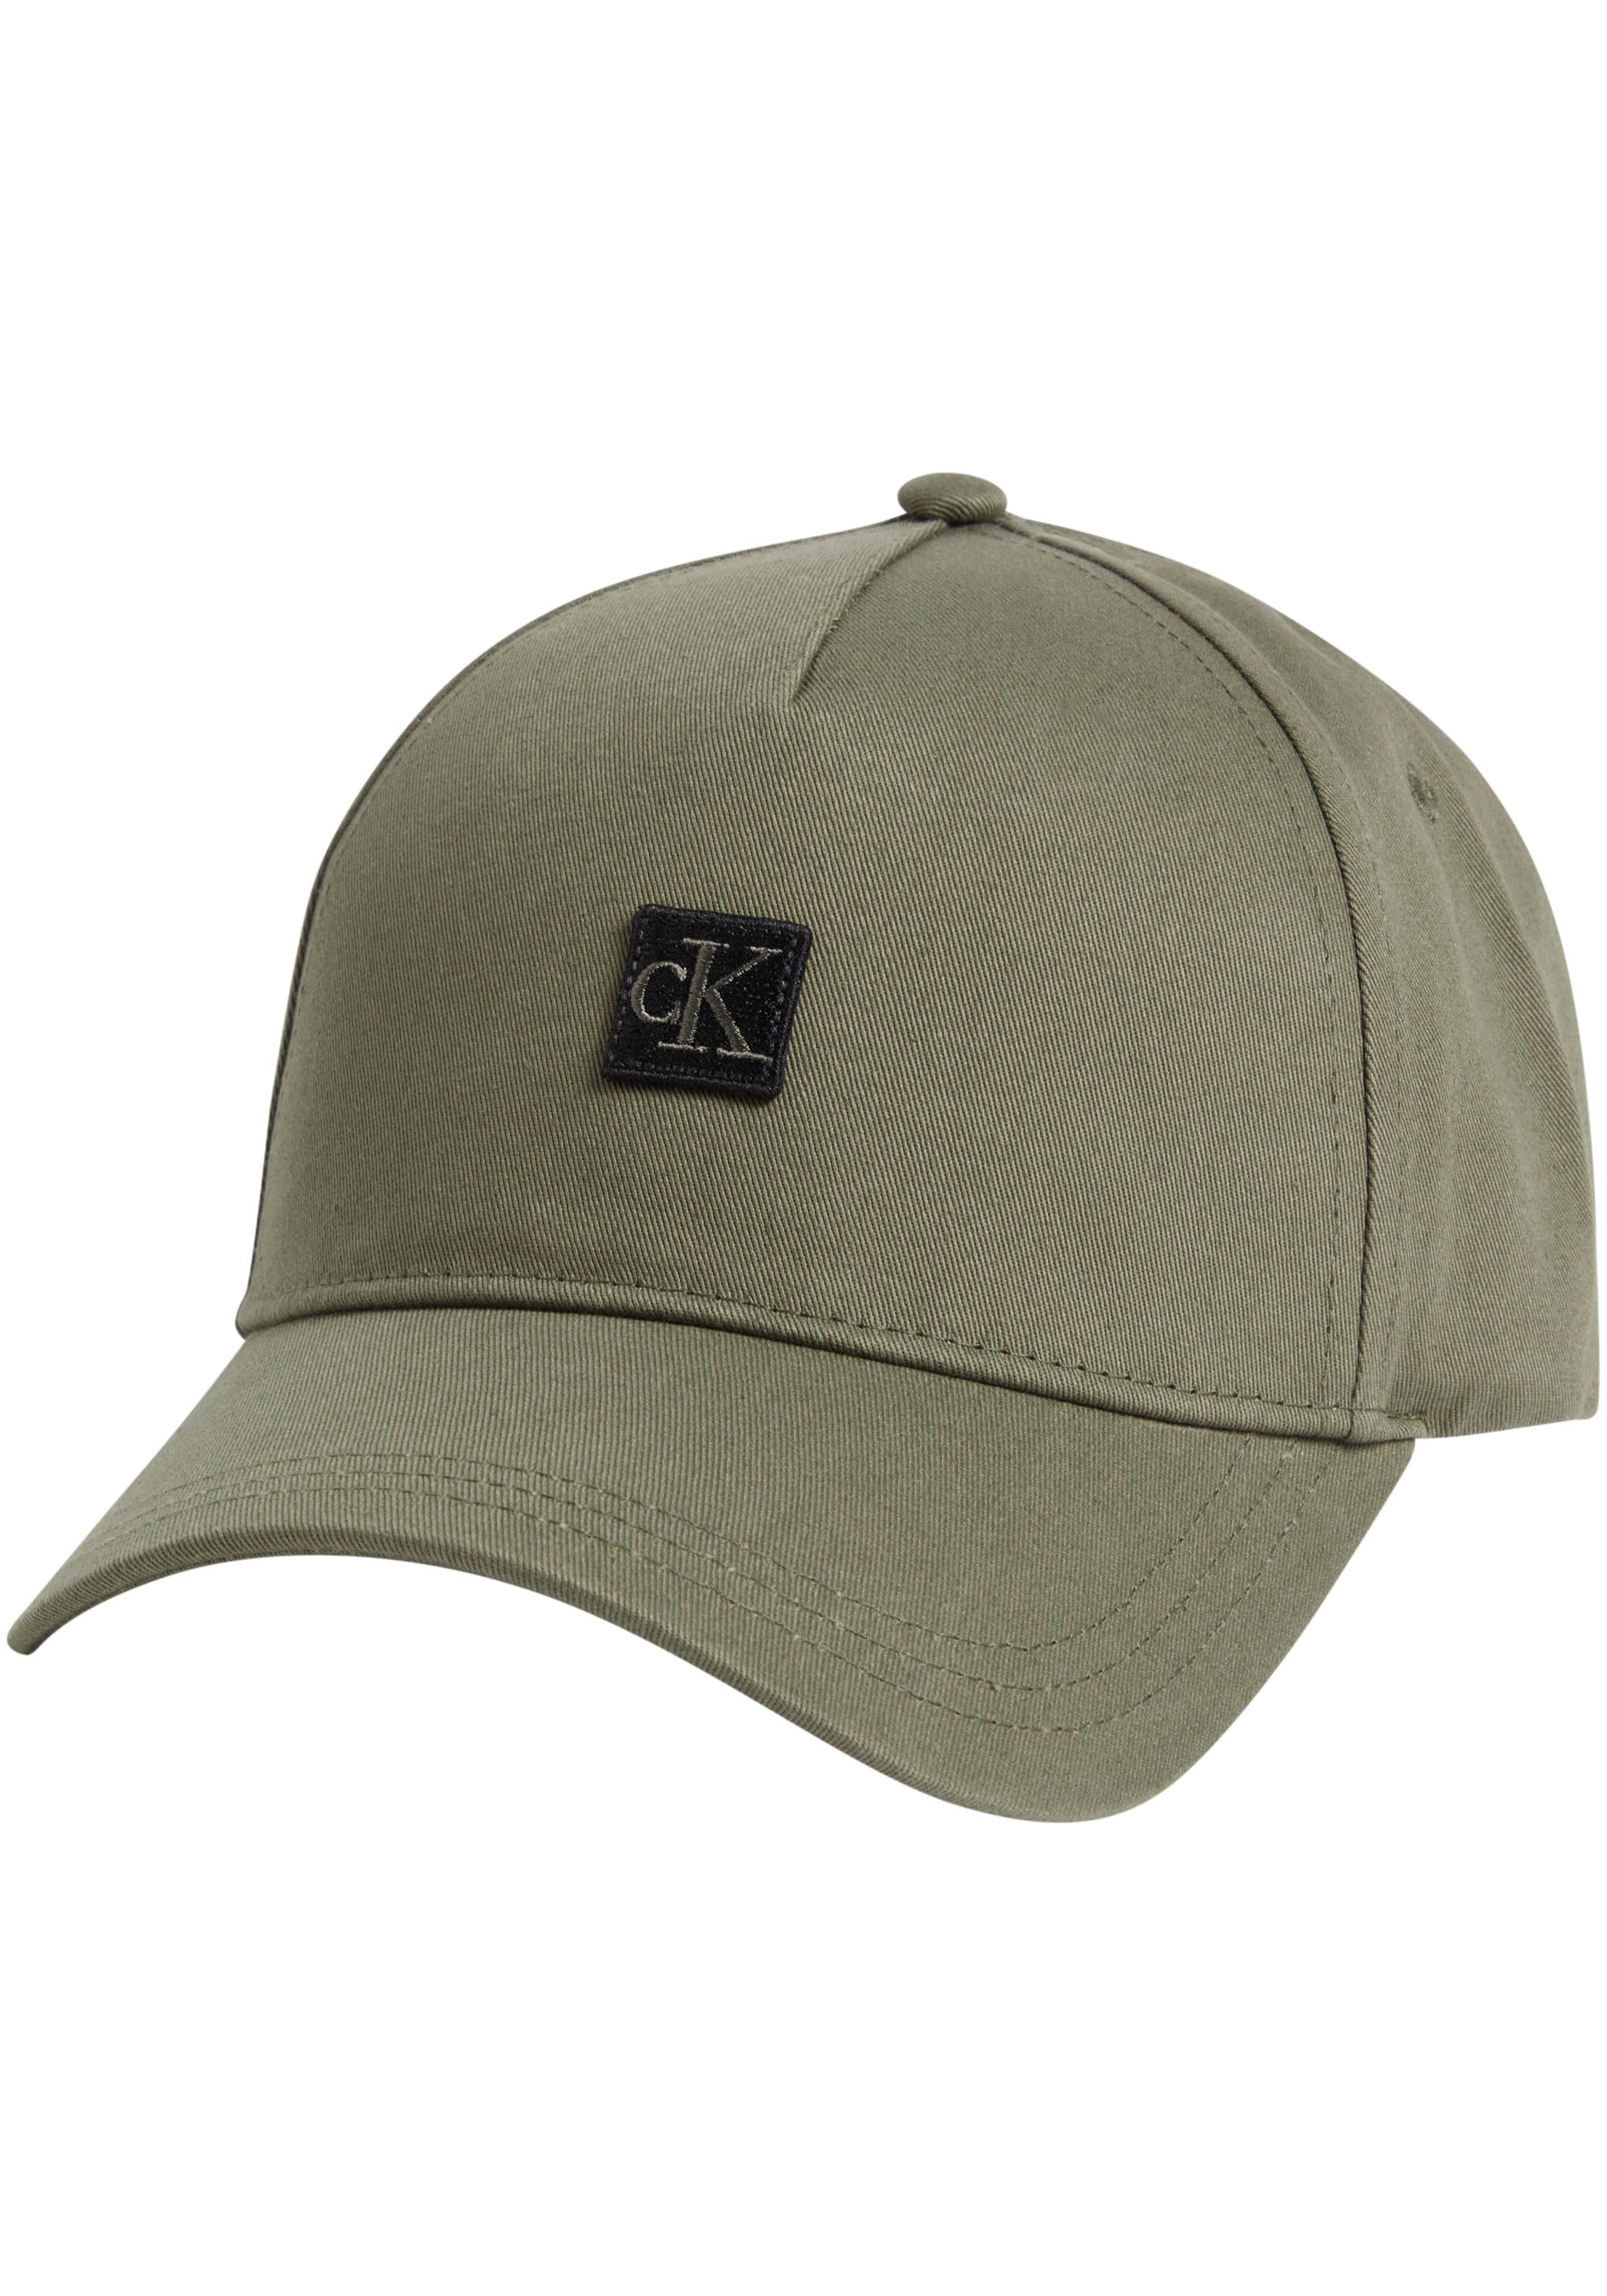 Shop »ARCHIVE Online Cap Calvin im Klein CAP« Jeans OTTO Baseball